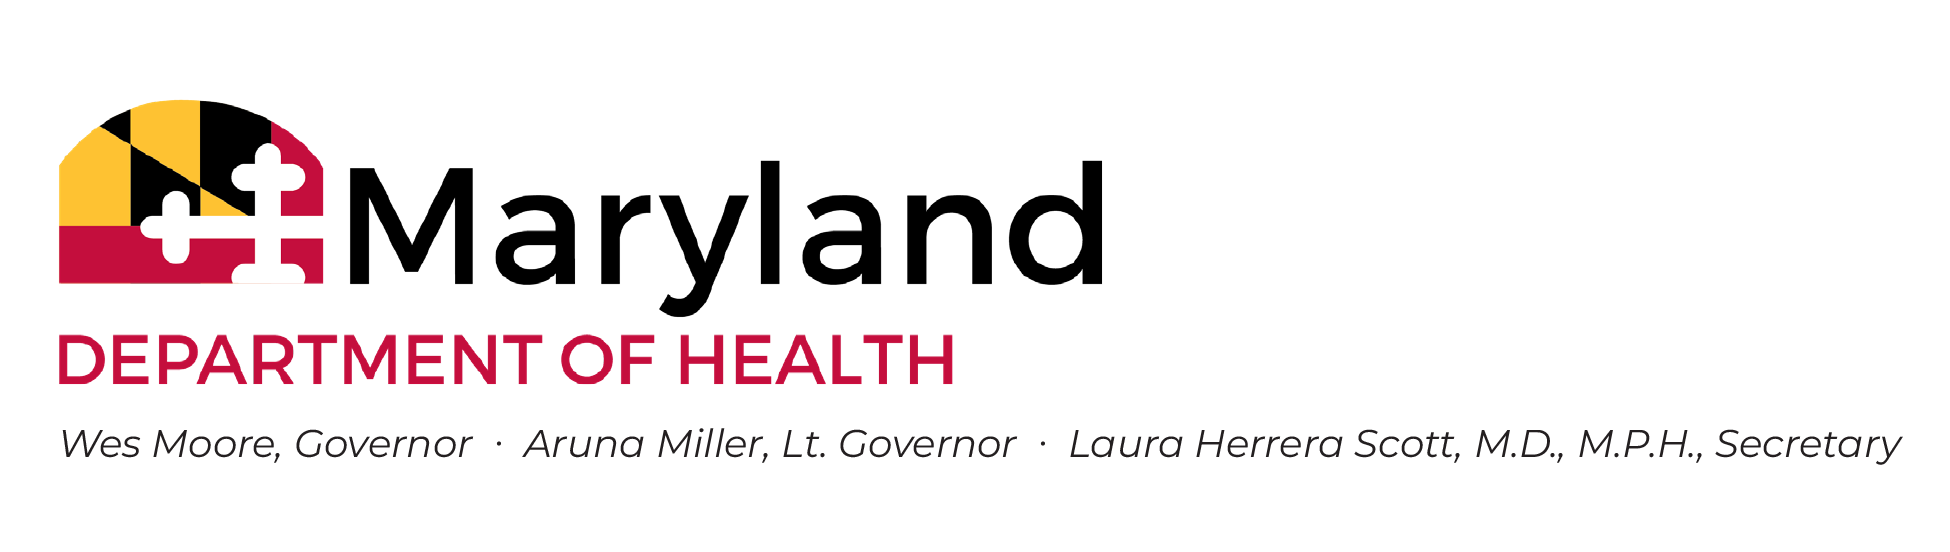 Maryland Department of Health Header